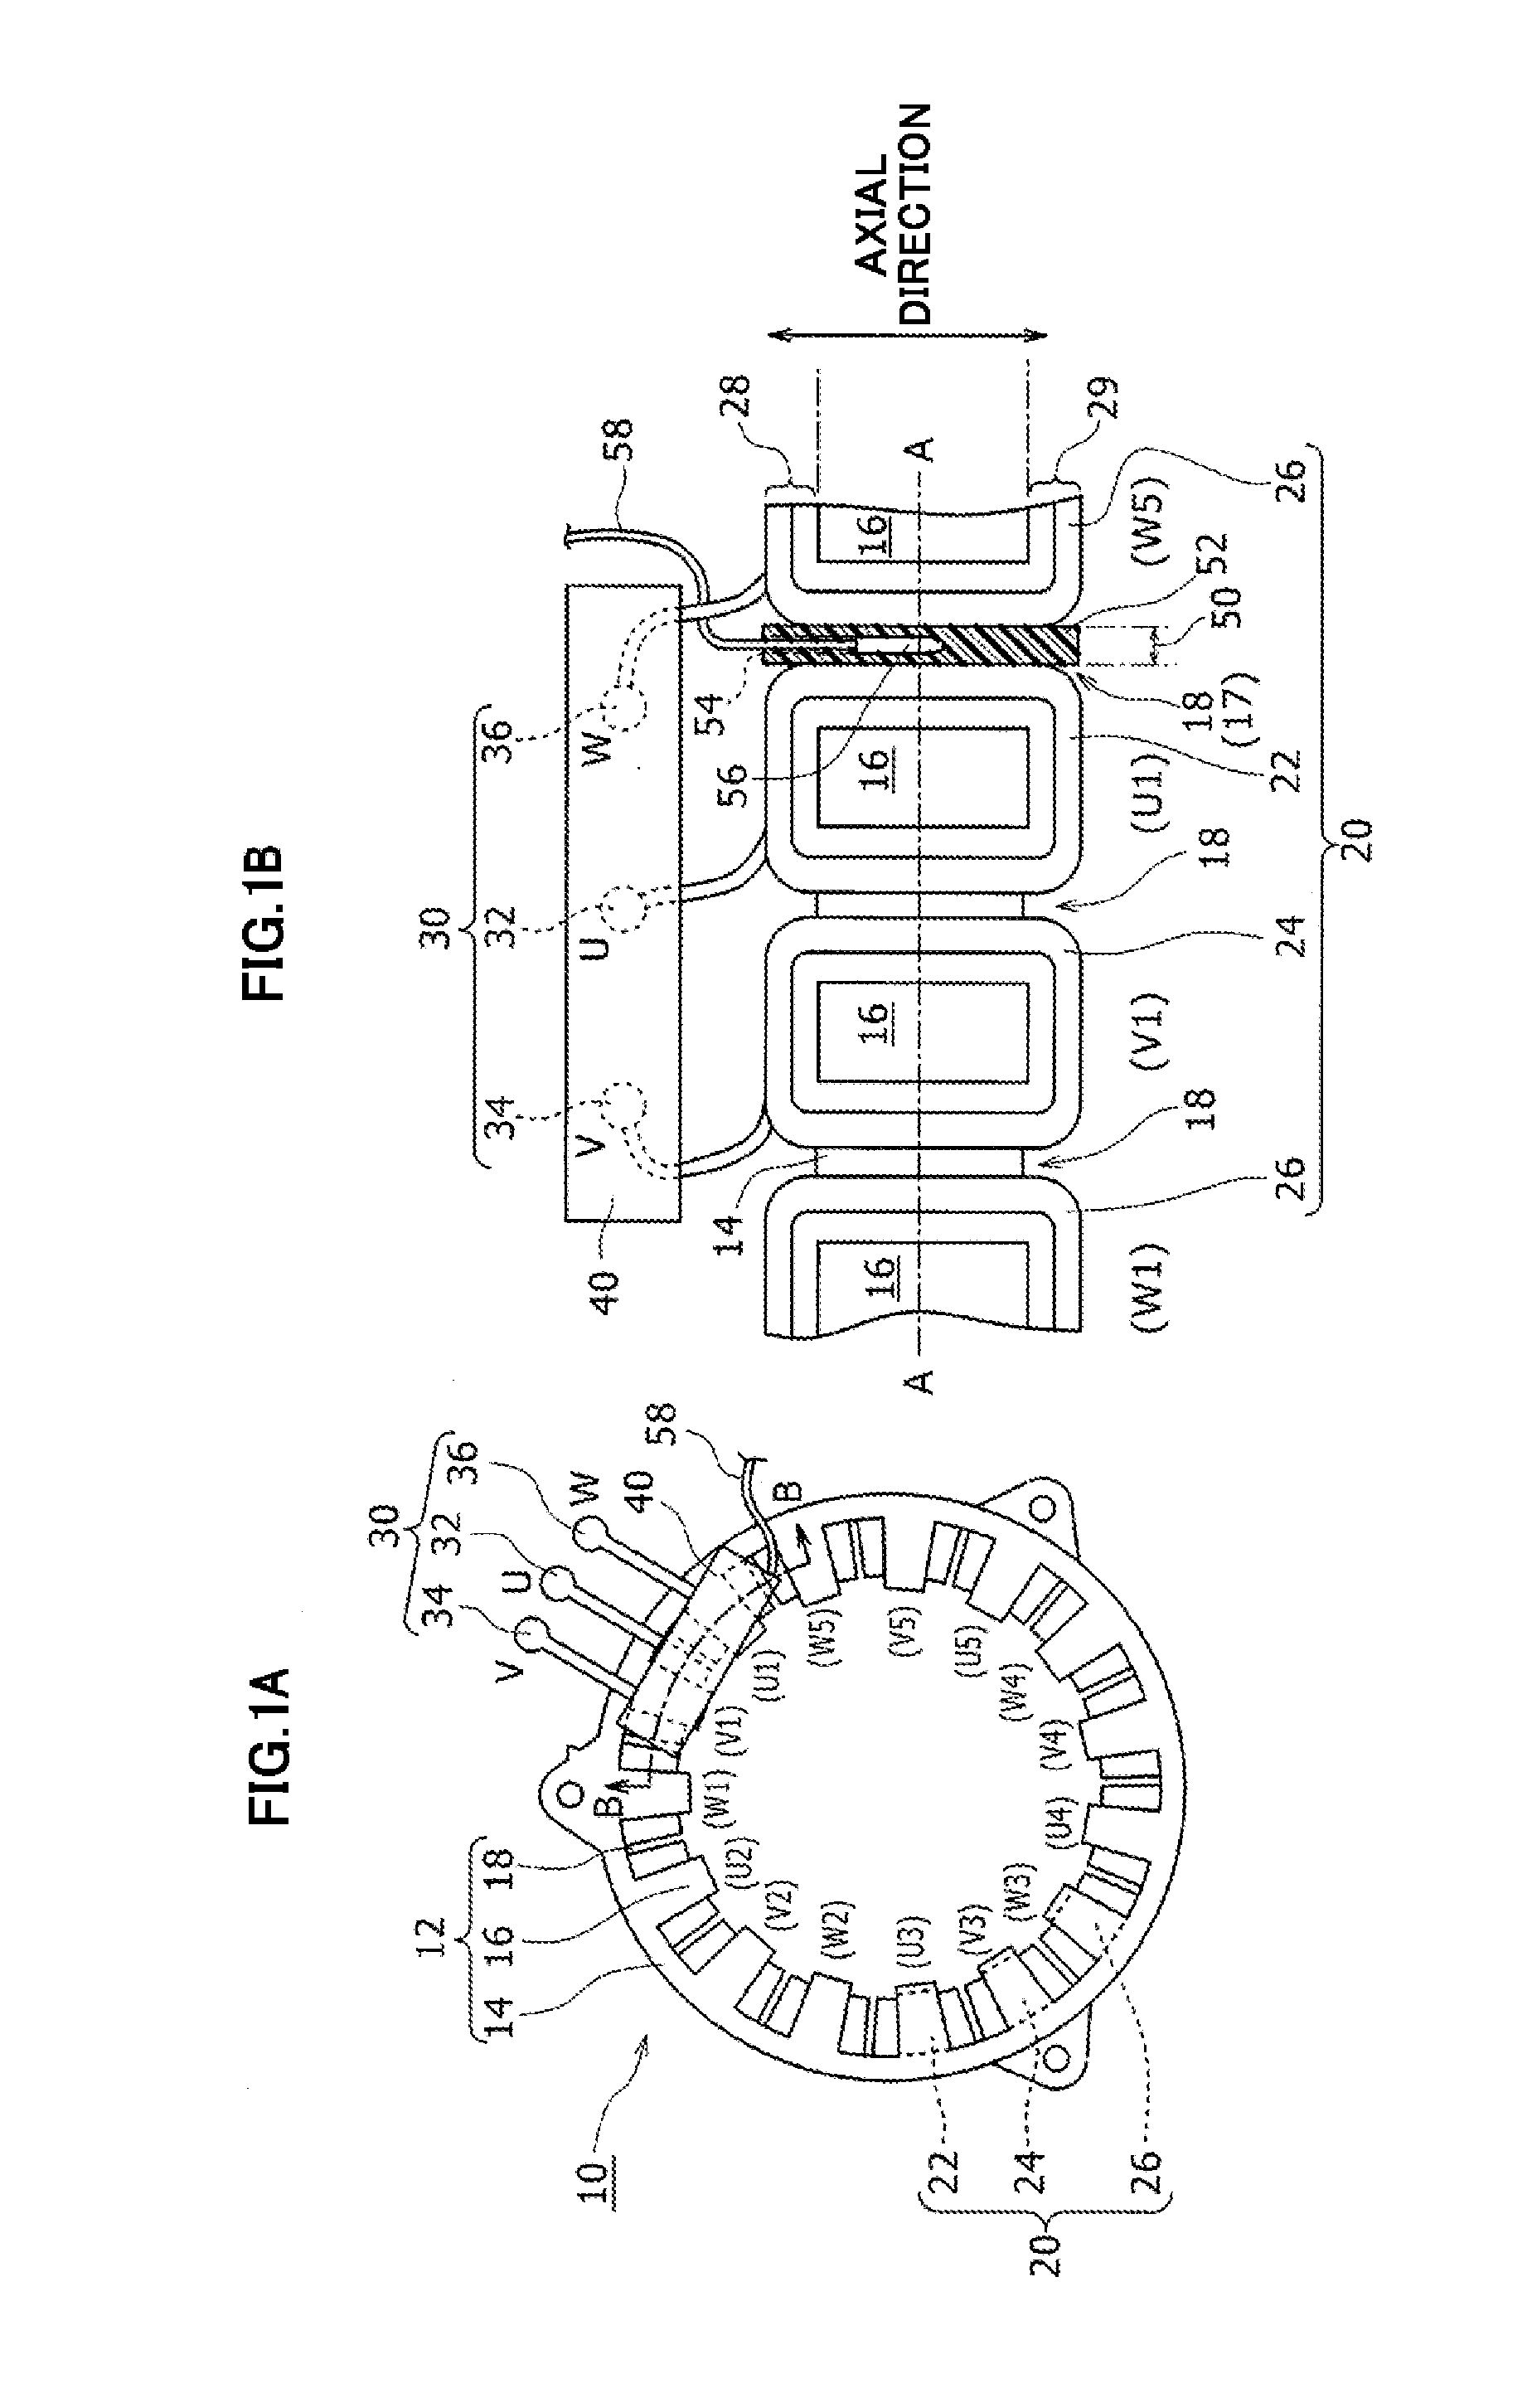 Stator of rotary electric machine